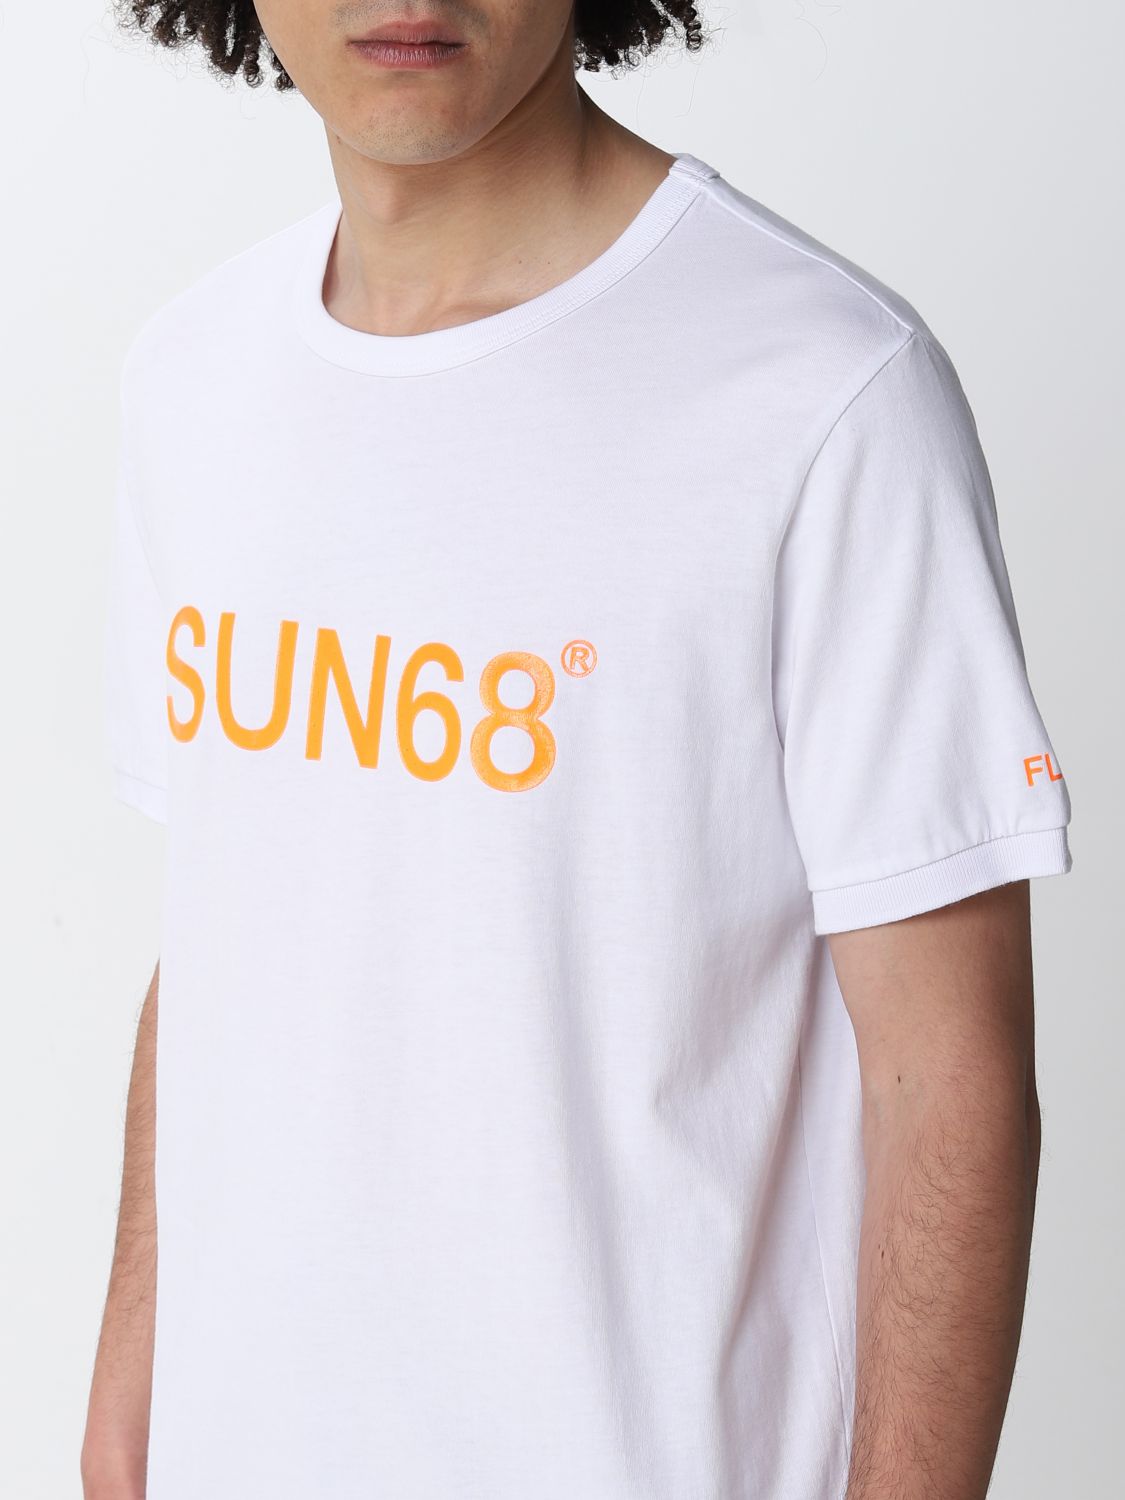 T-shirt Sun 68: Sun 68 t-shirt for men white 3